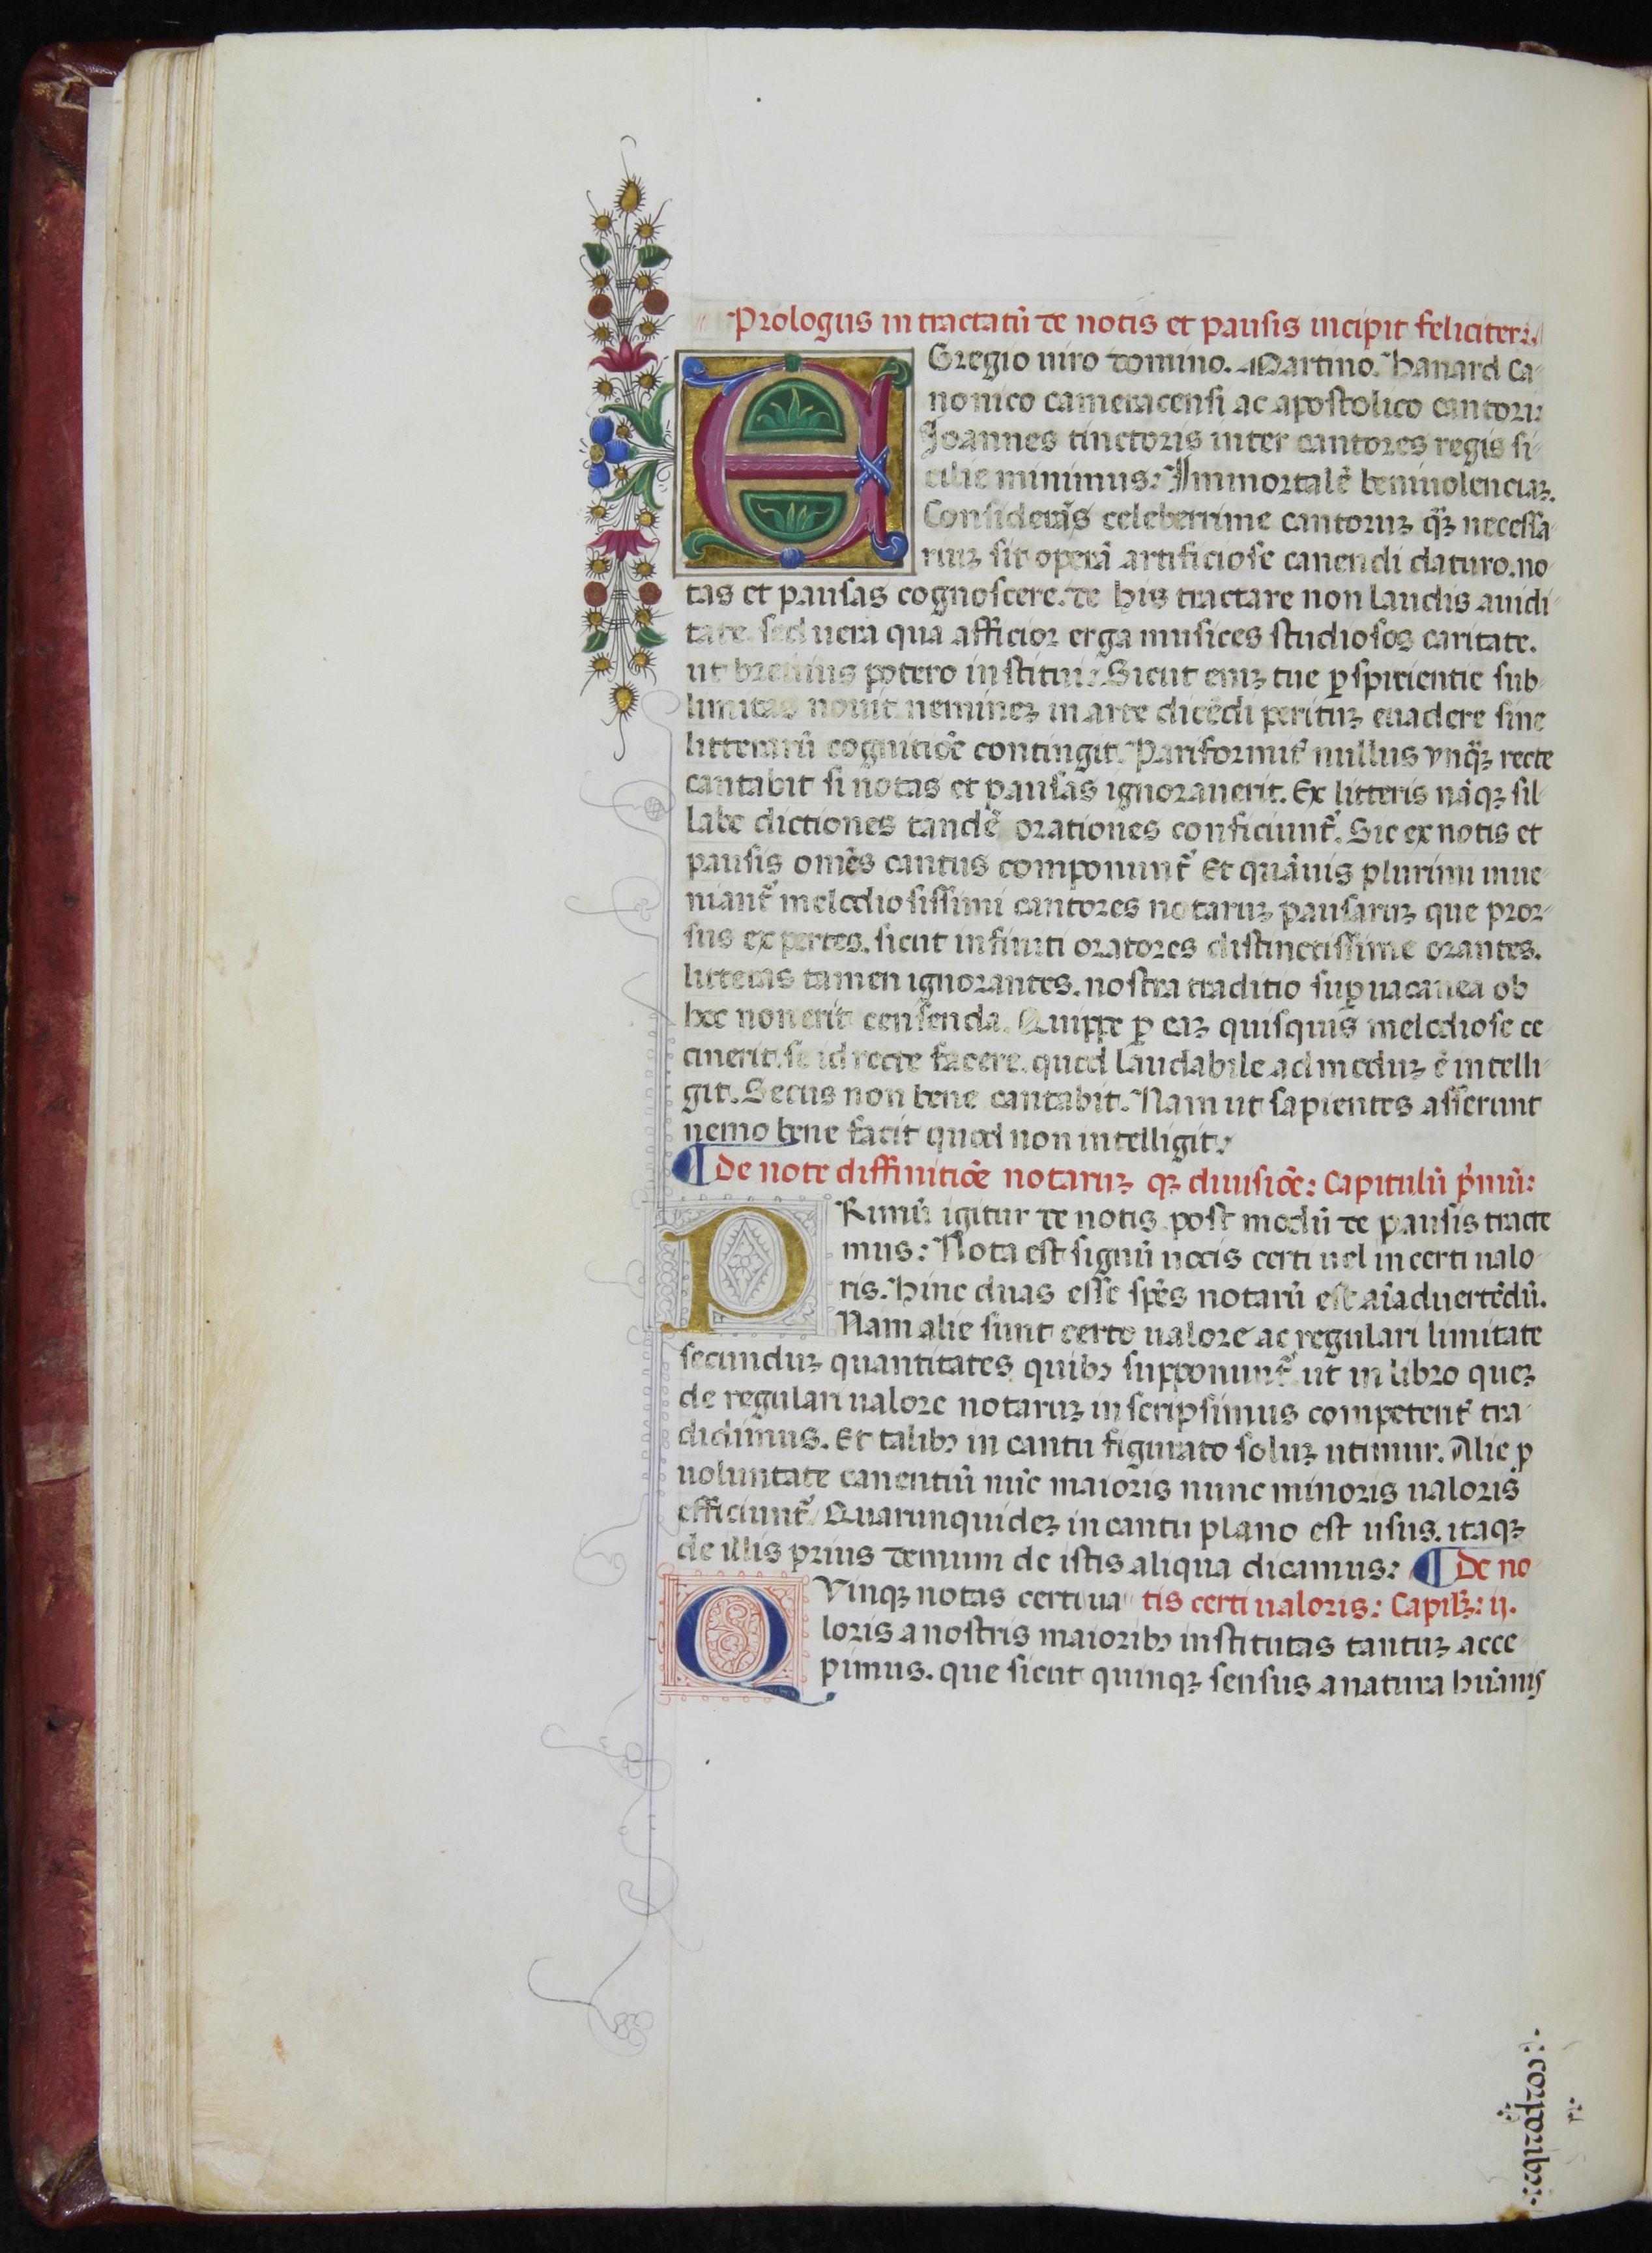 Universitat de València, Biblioteca Històrica, MS 835 [olim 844], fol. 43v. Source: Universitat de València, Biblioteca Històrica.